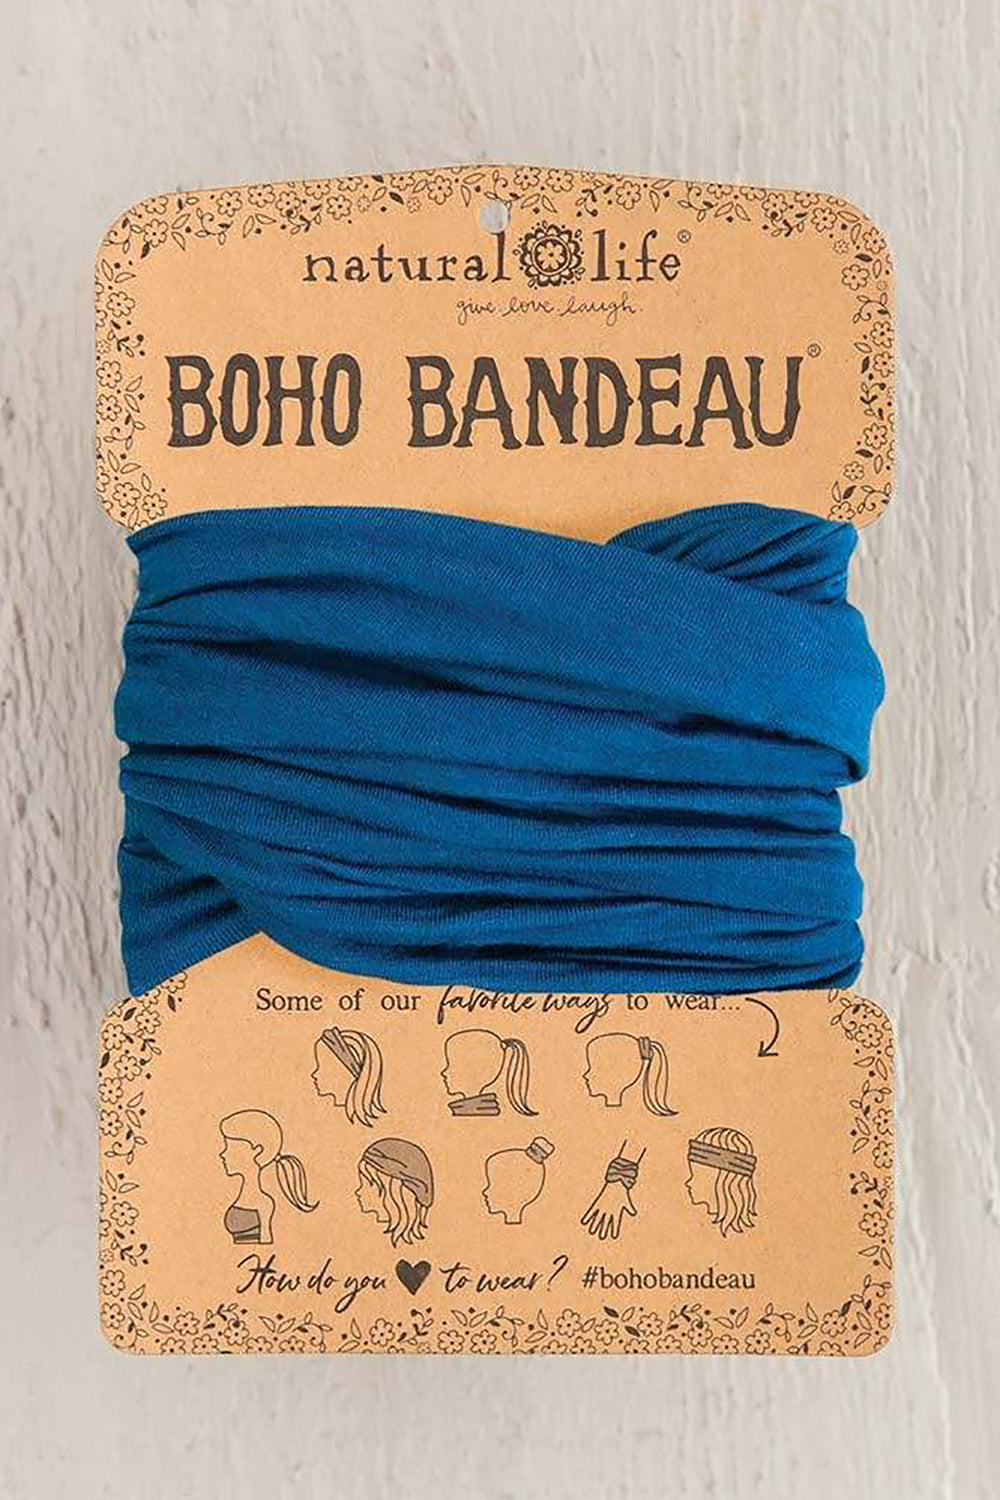 how to wear a bandeau